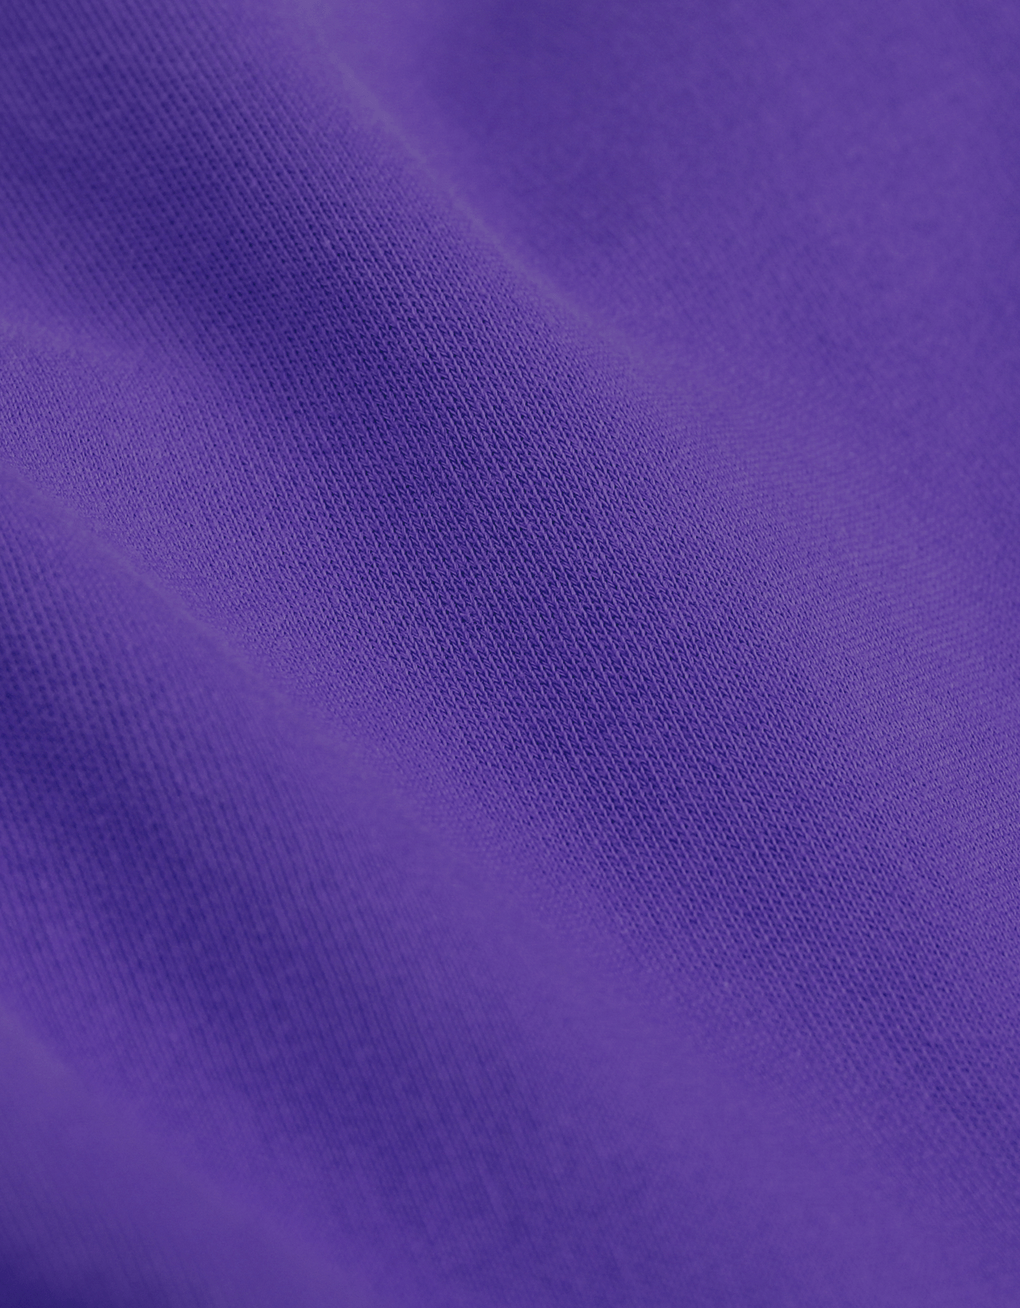 Camiseta Ligera de Mujer Orgánica Ultra Violeta - ECRU